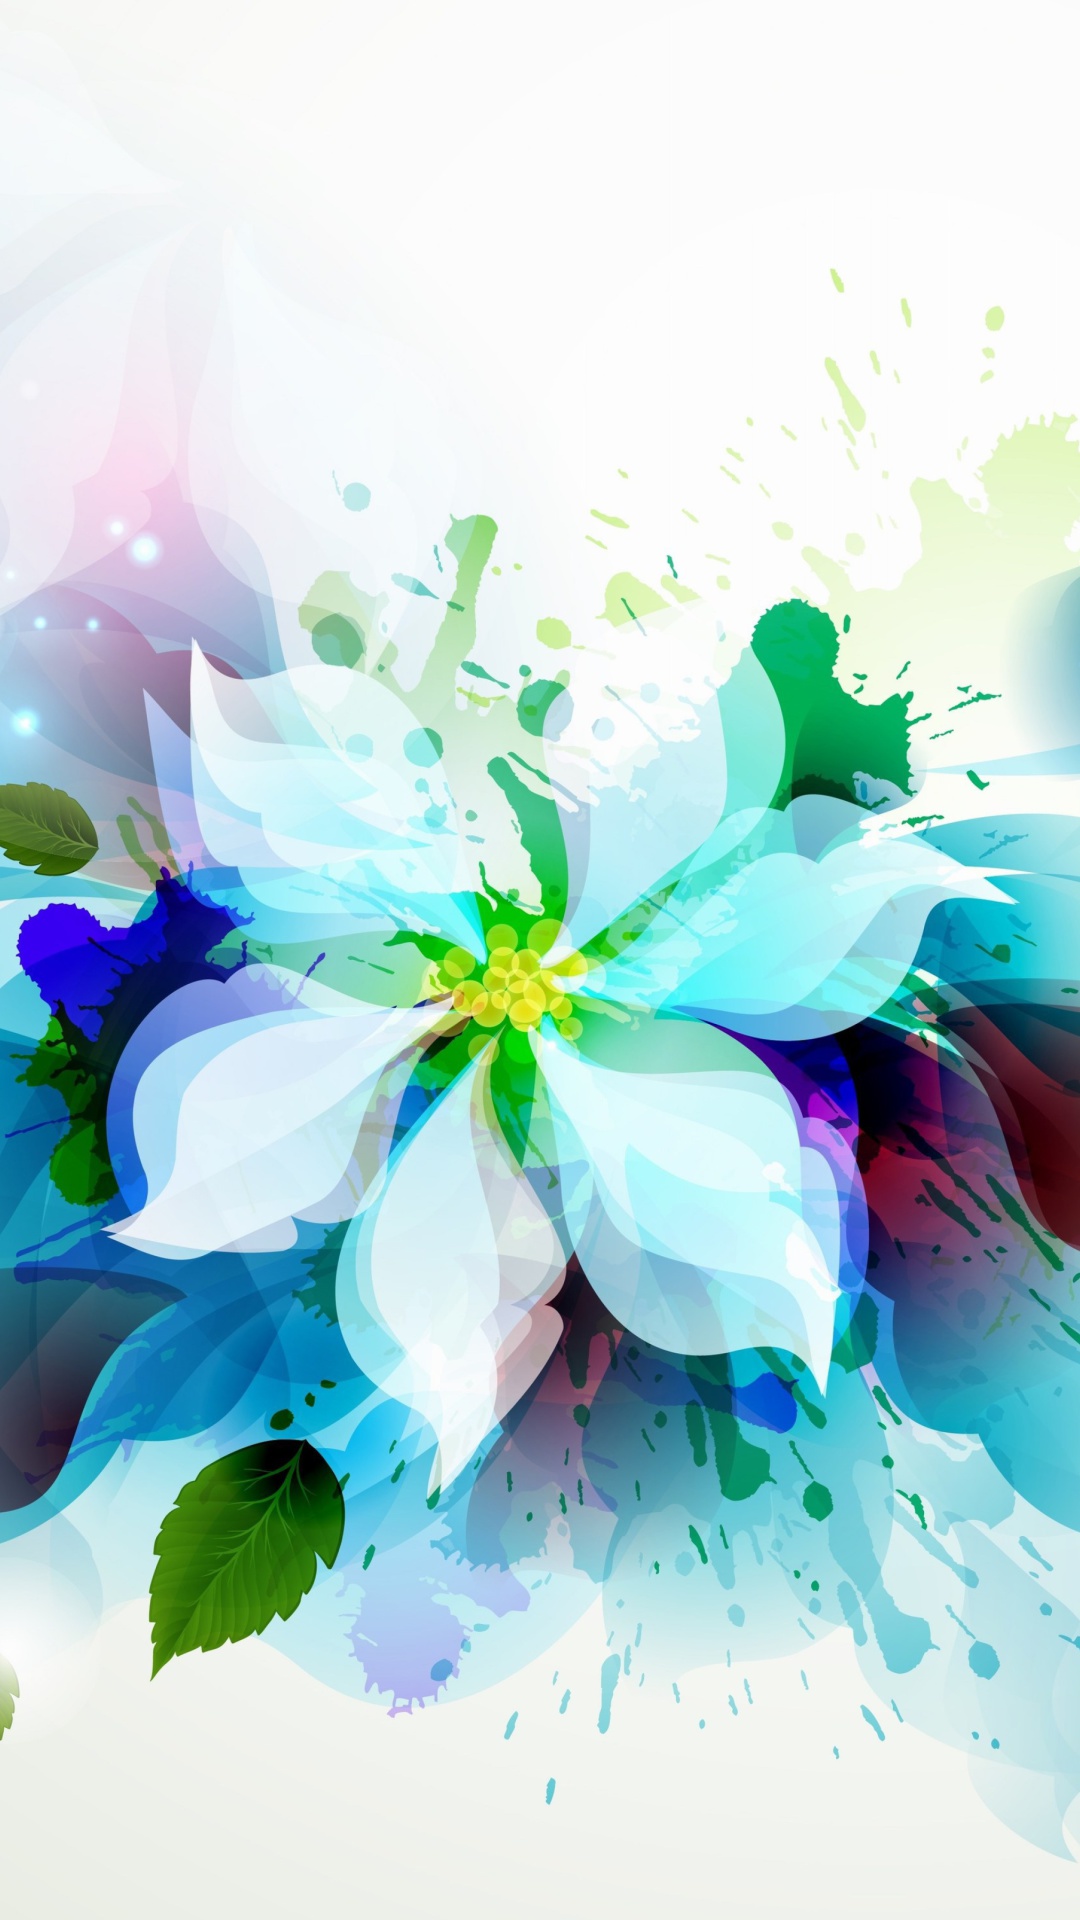 Drawn flower petals screenshot #1 1080x1920